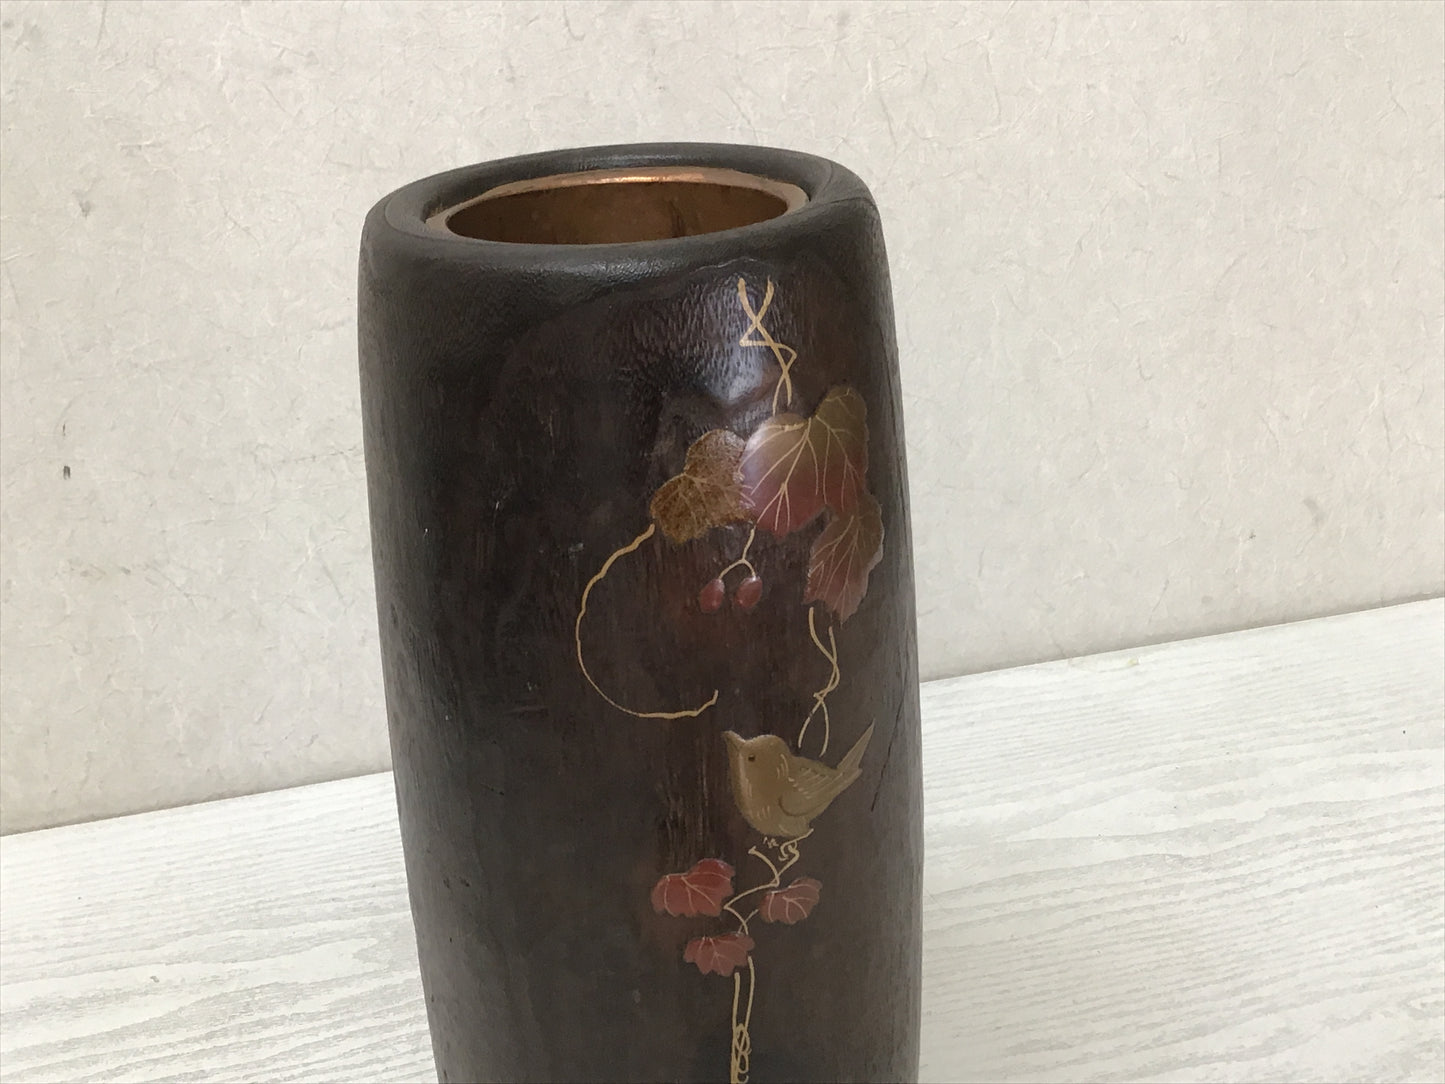 Y1997 FLOWER VASE Makie lacquer interior Japan antique ikebana kabin decor